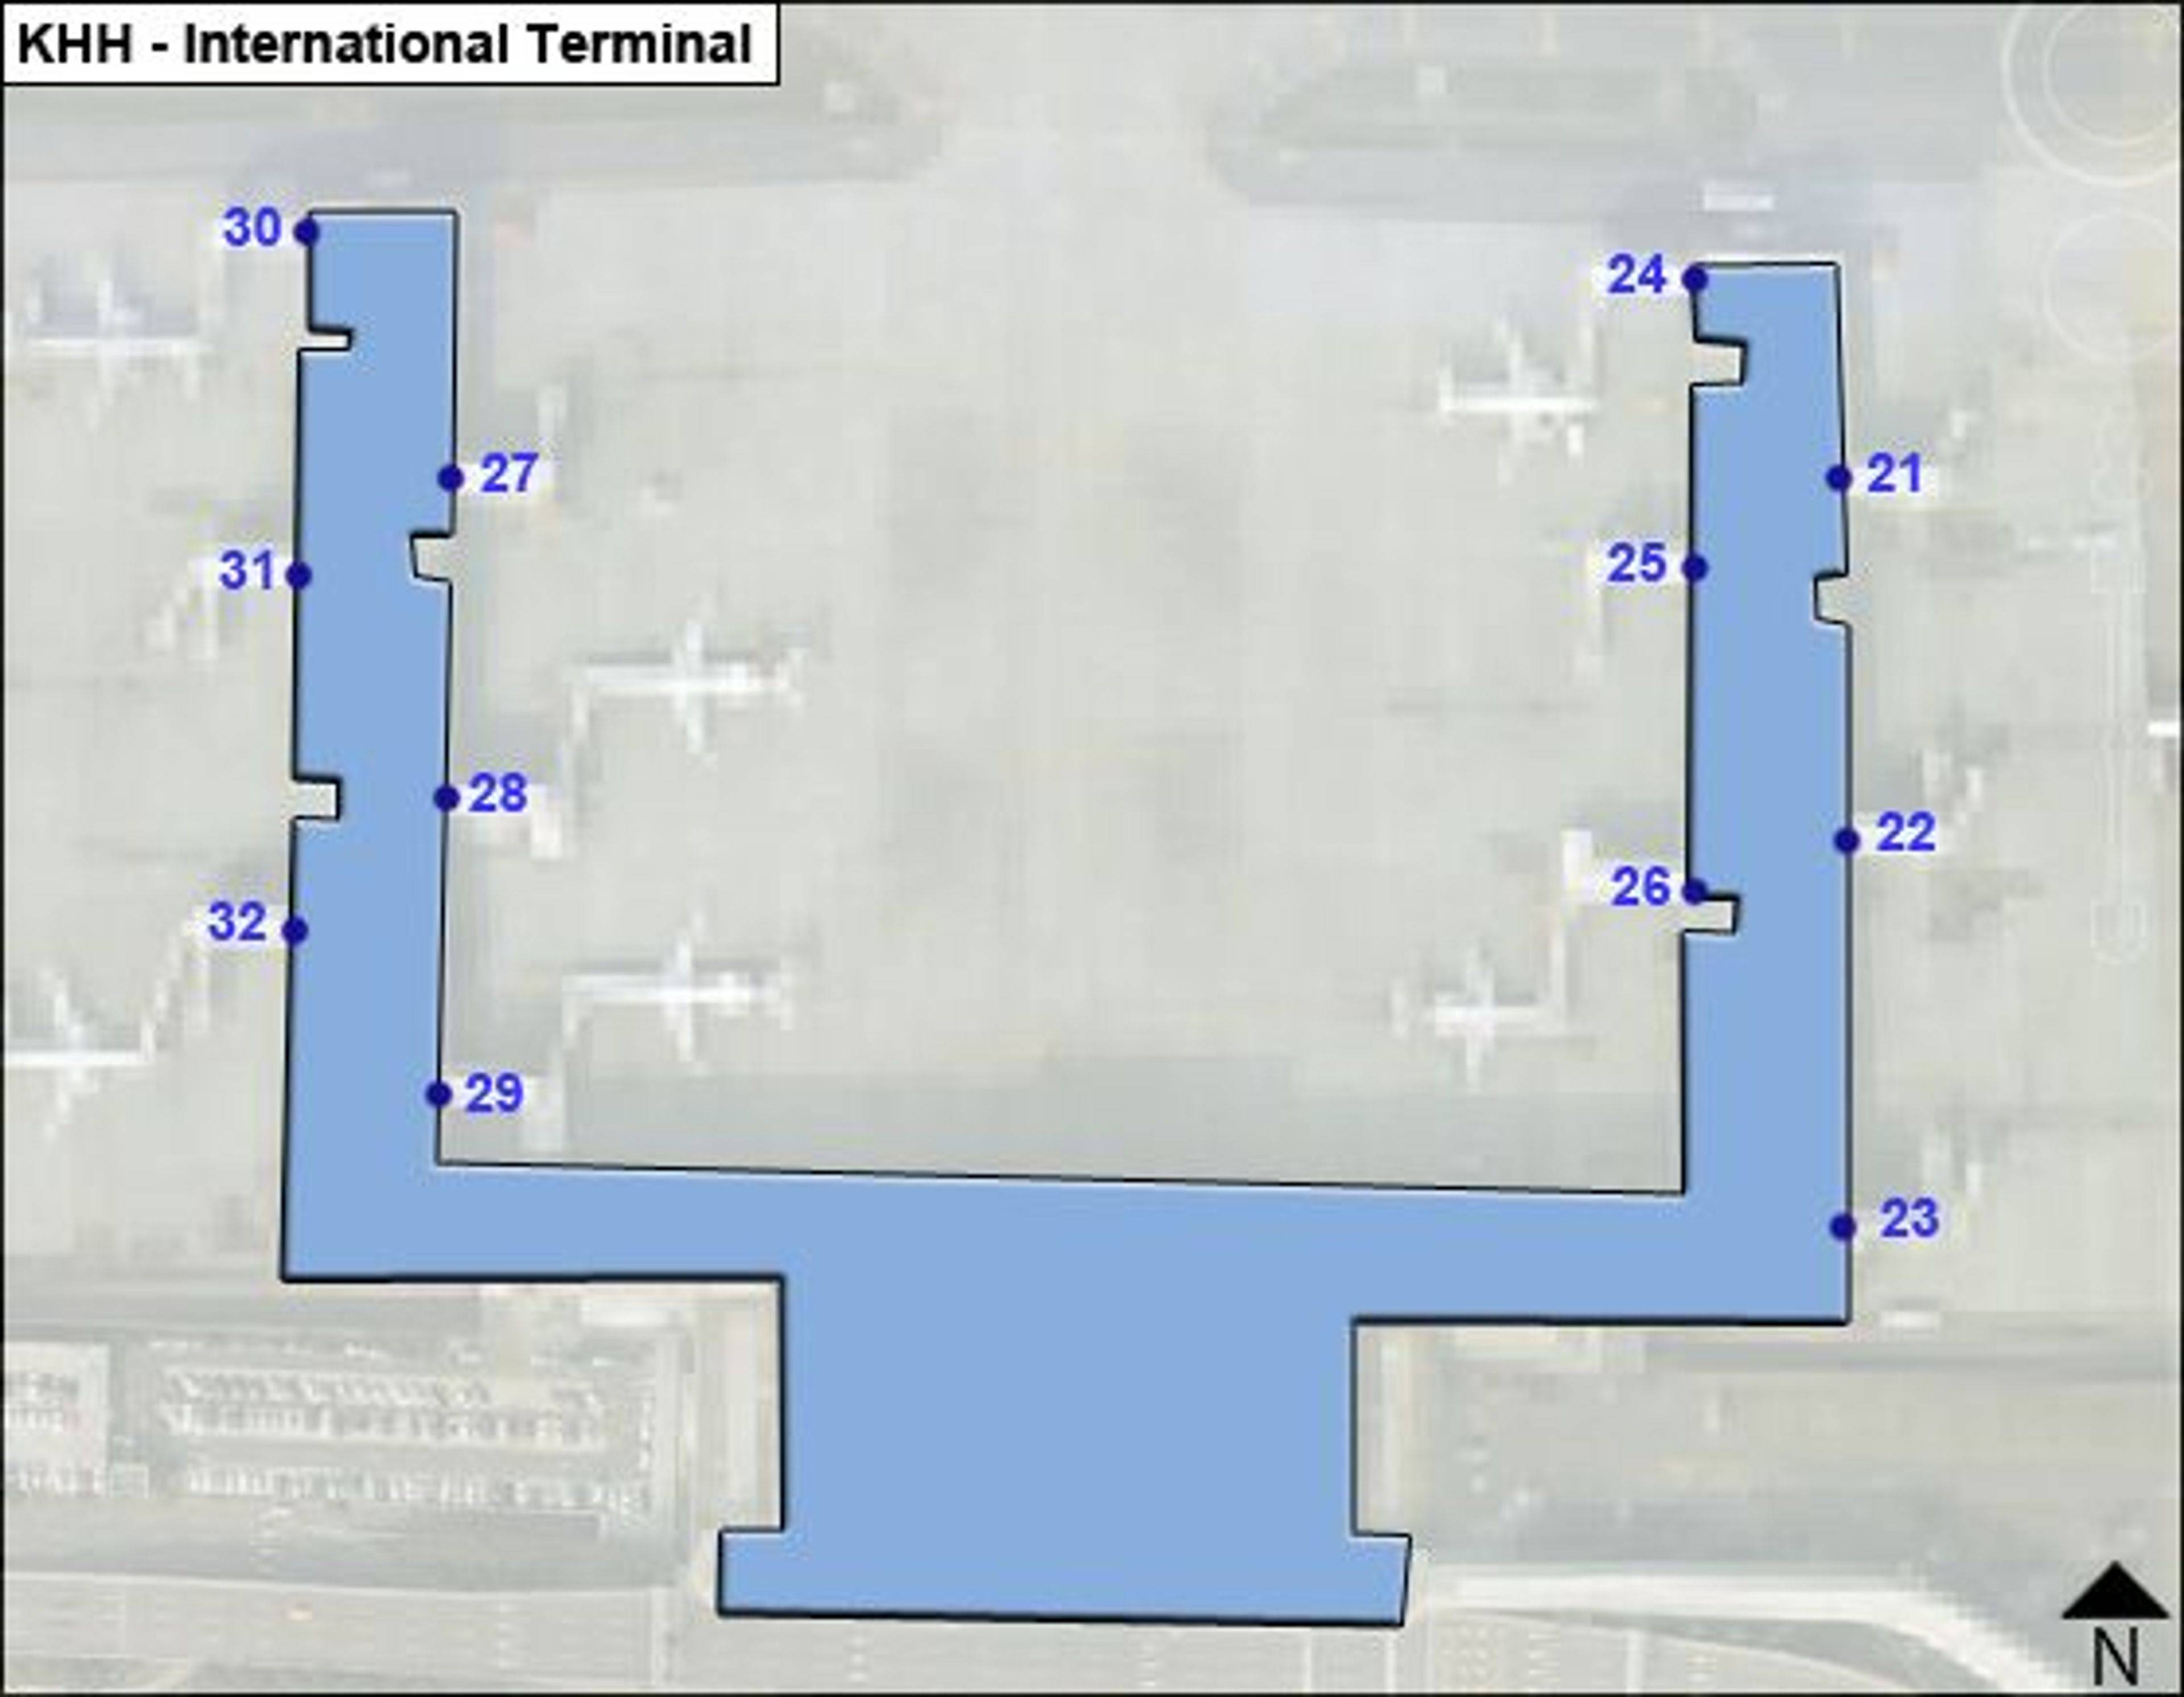 KHH Intl Terminal Map